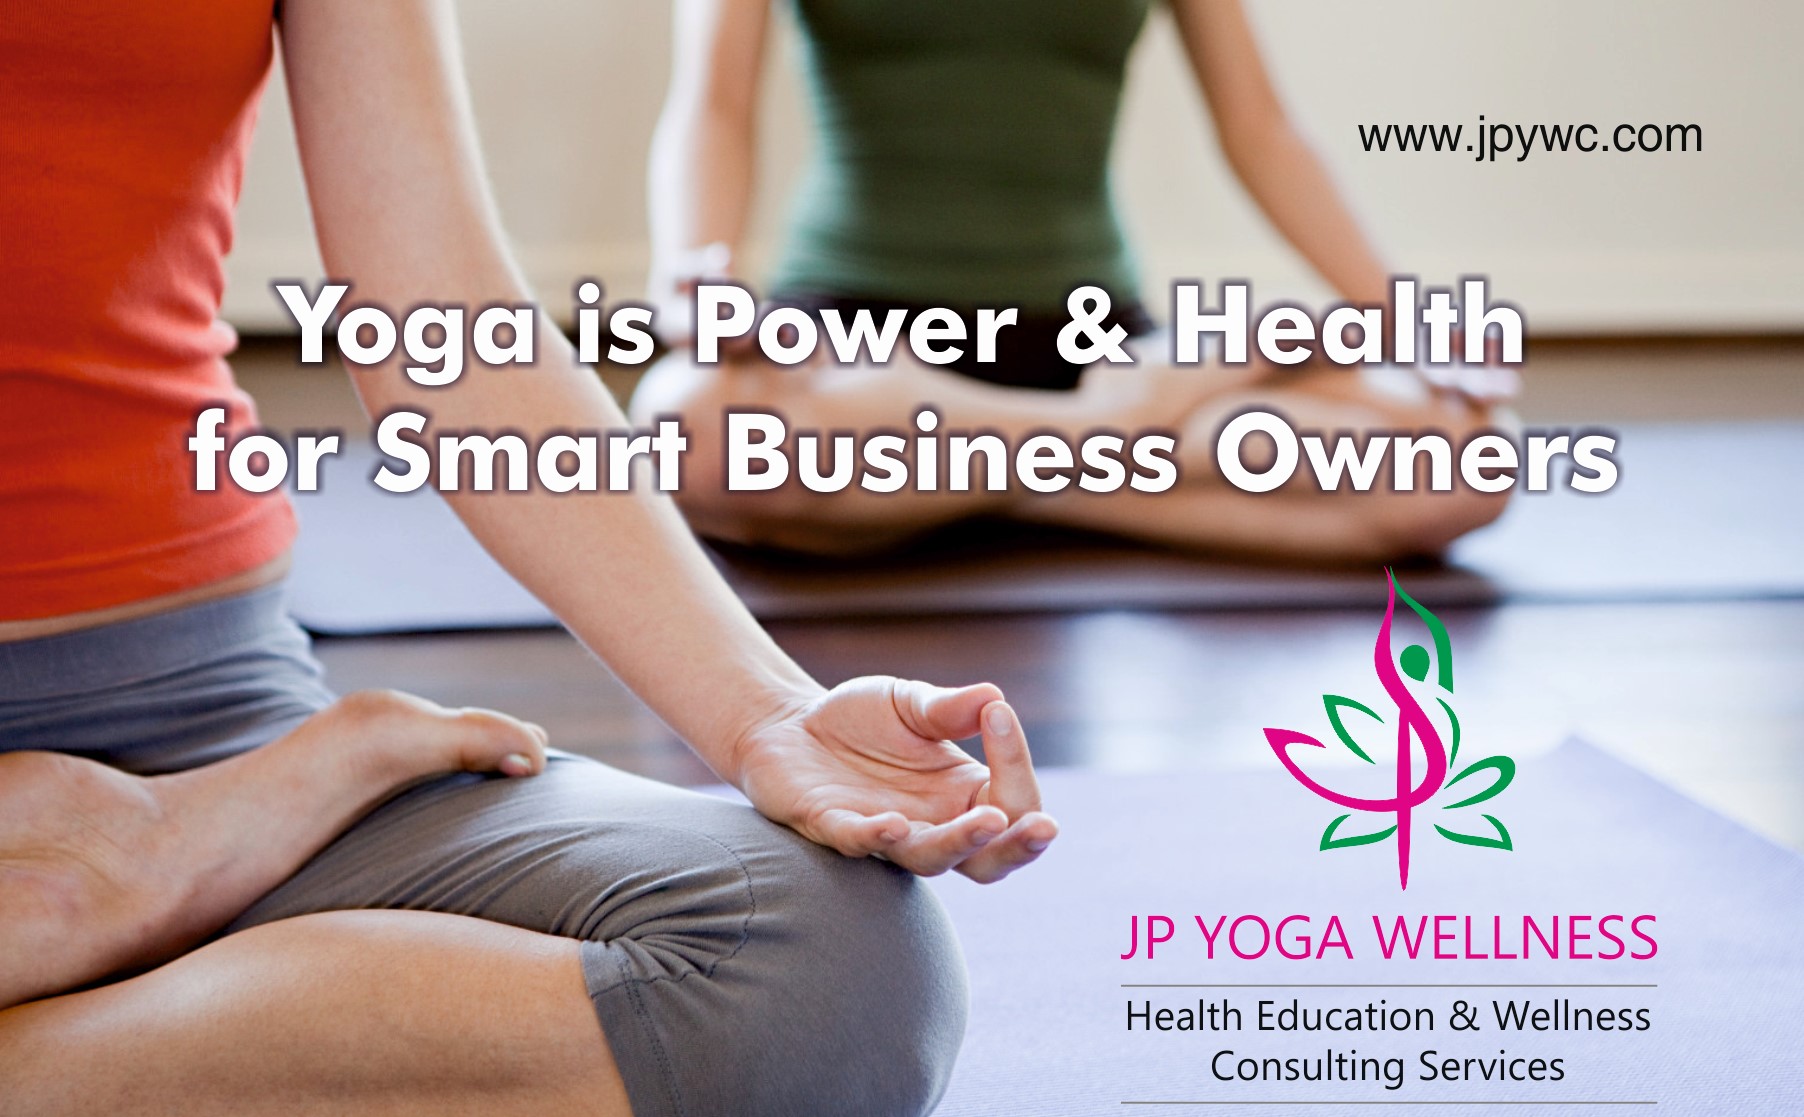 JP Yoga Wellness Consulting